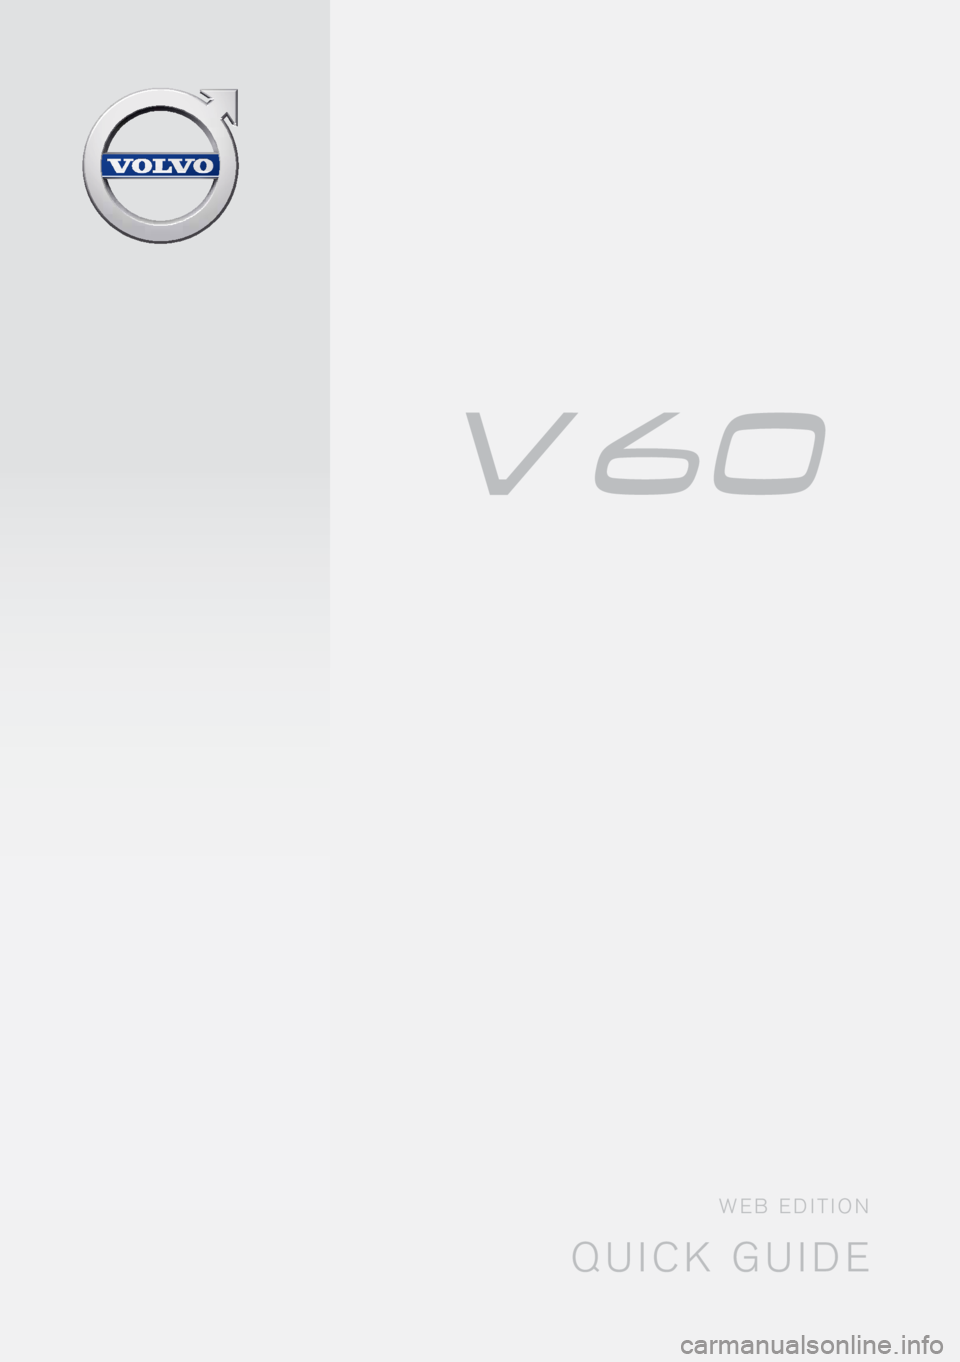 VOLVO V60 2016  Quick Guide 